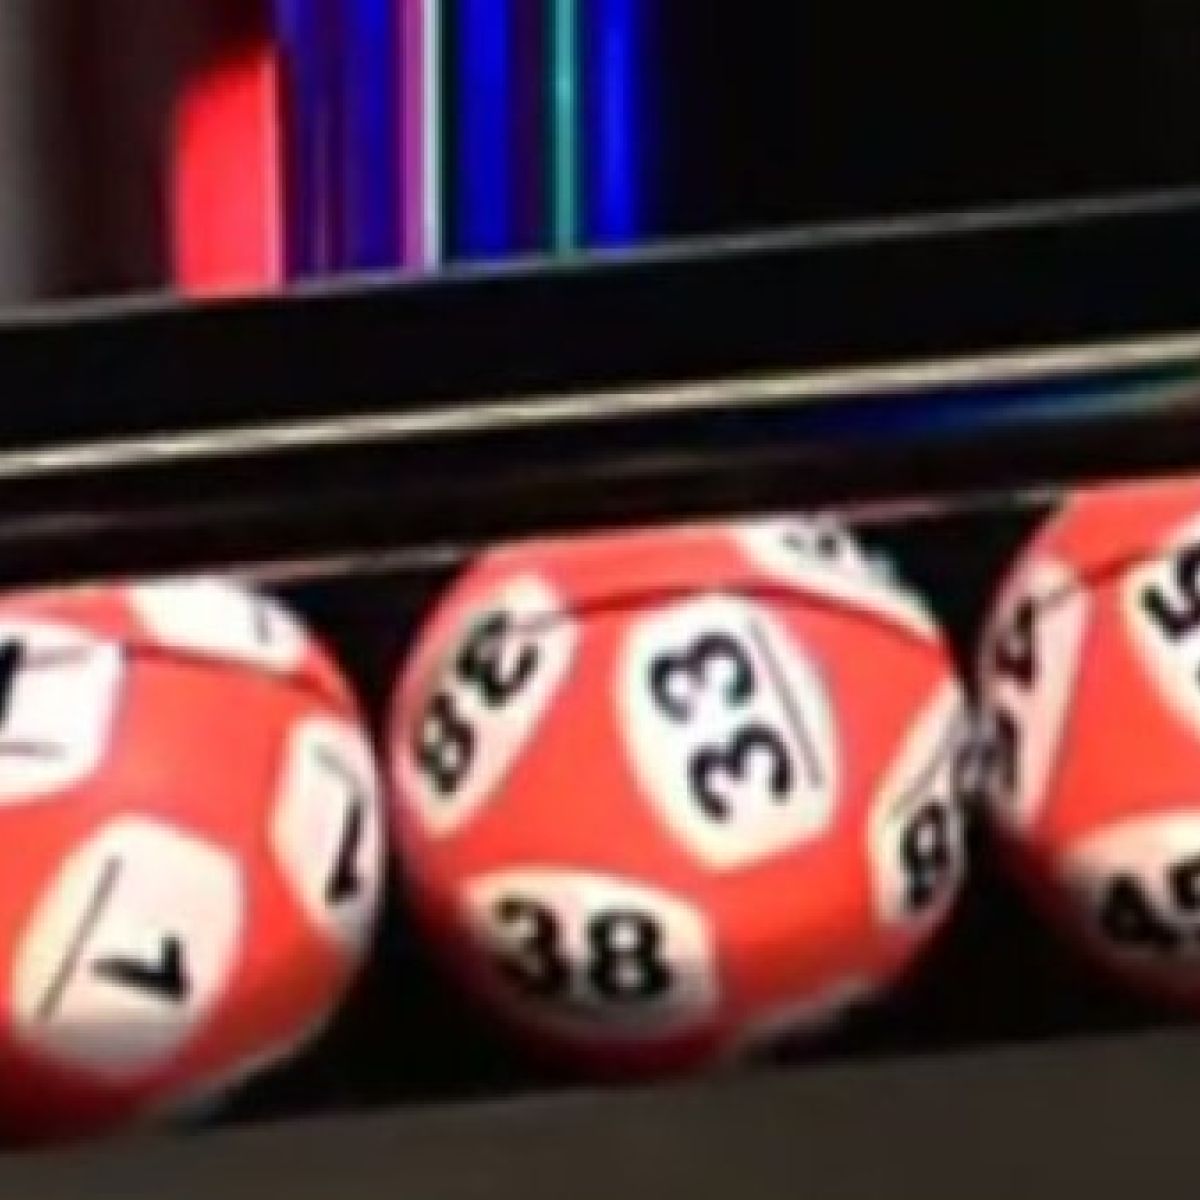 lotto two numbers plus bonus ball